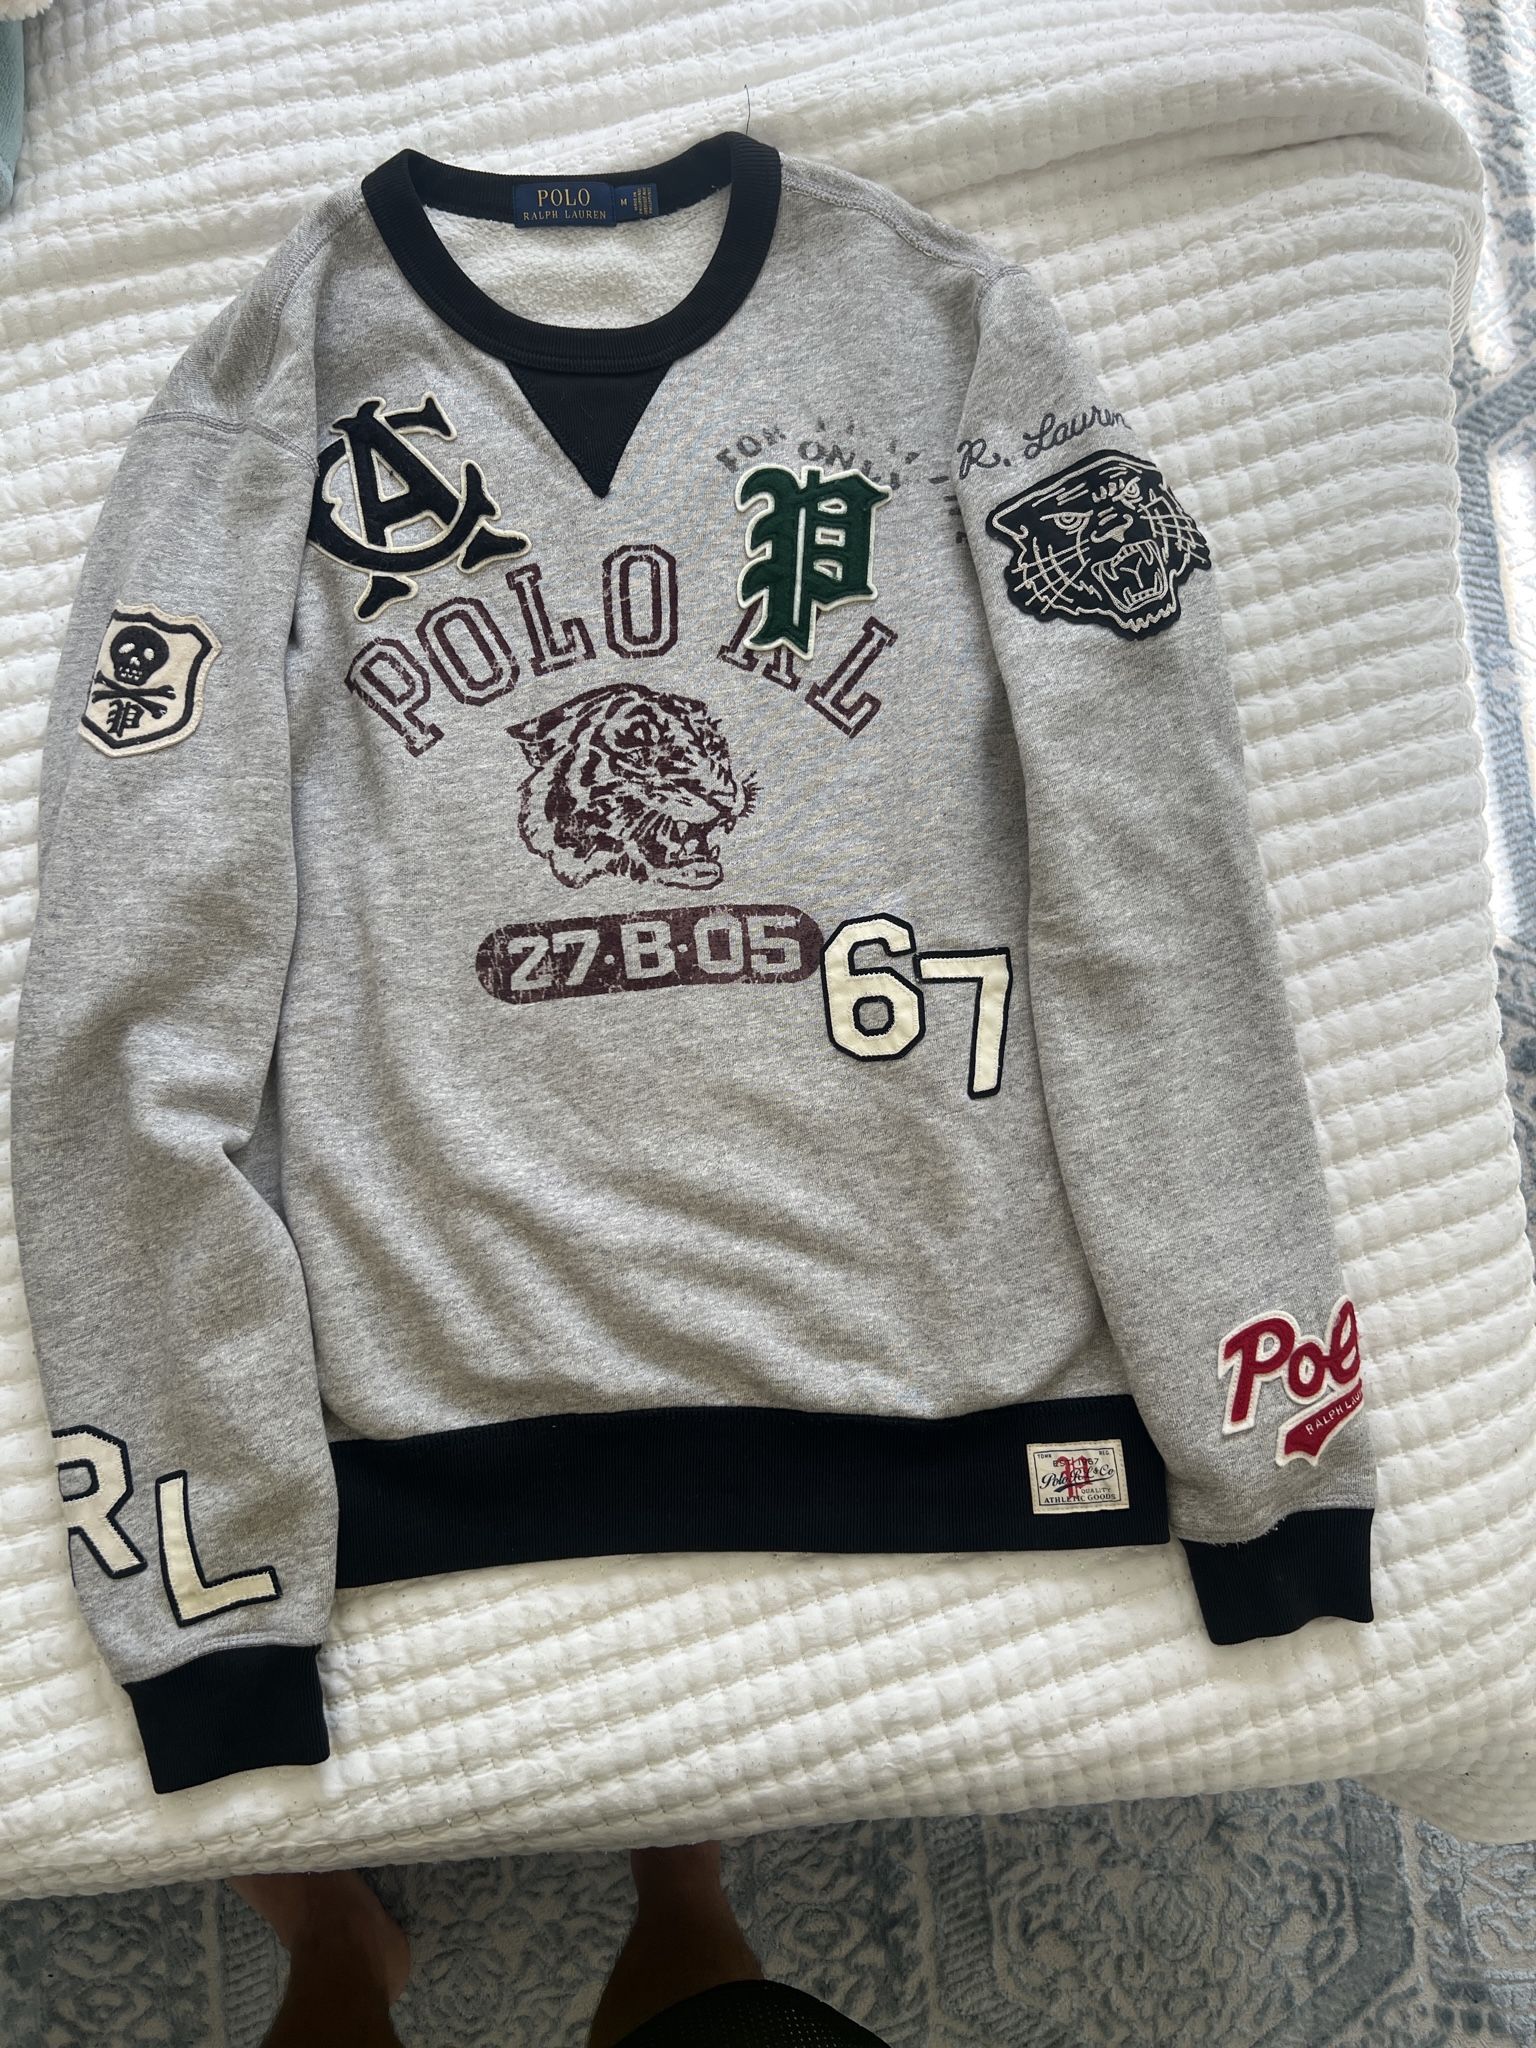 Polo Ralph Lauren, gray sweater patches size medium